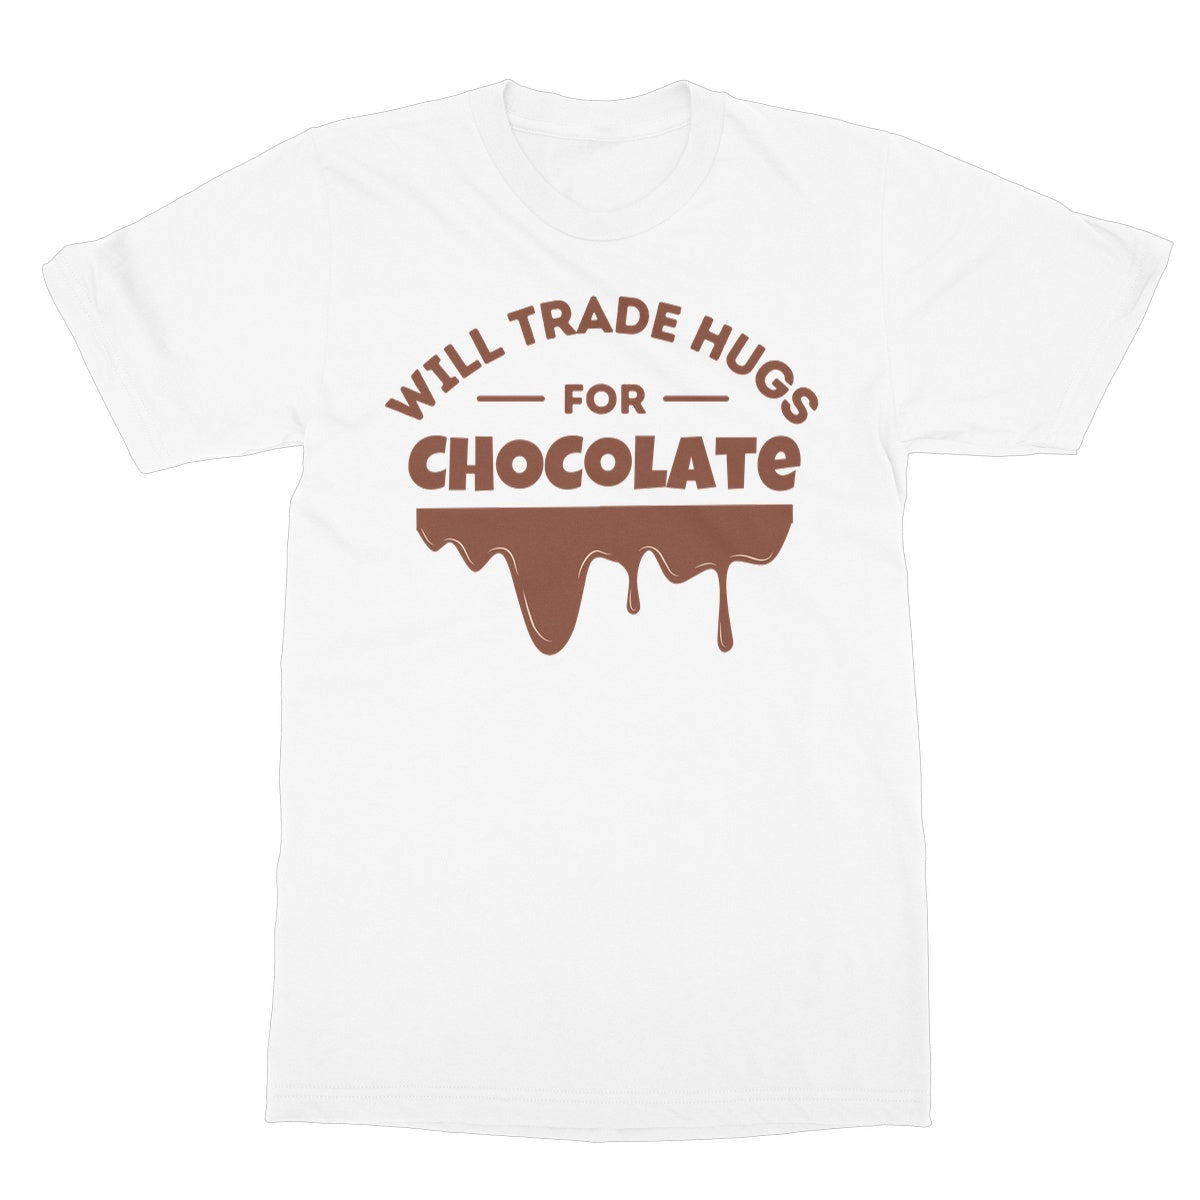 will trade hugs for chocolate t shirt white